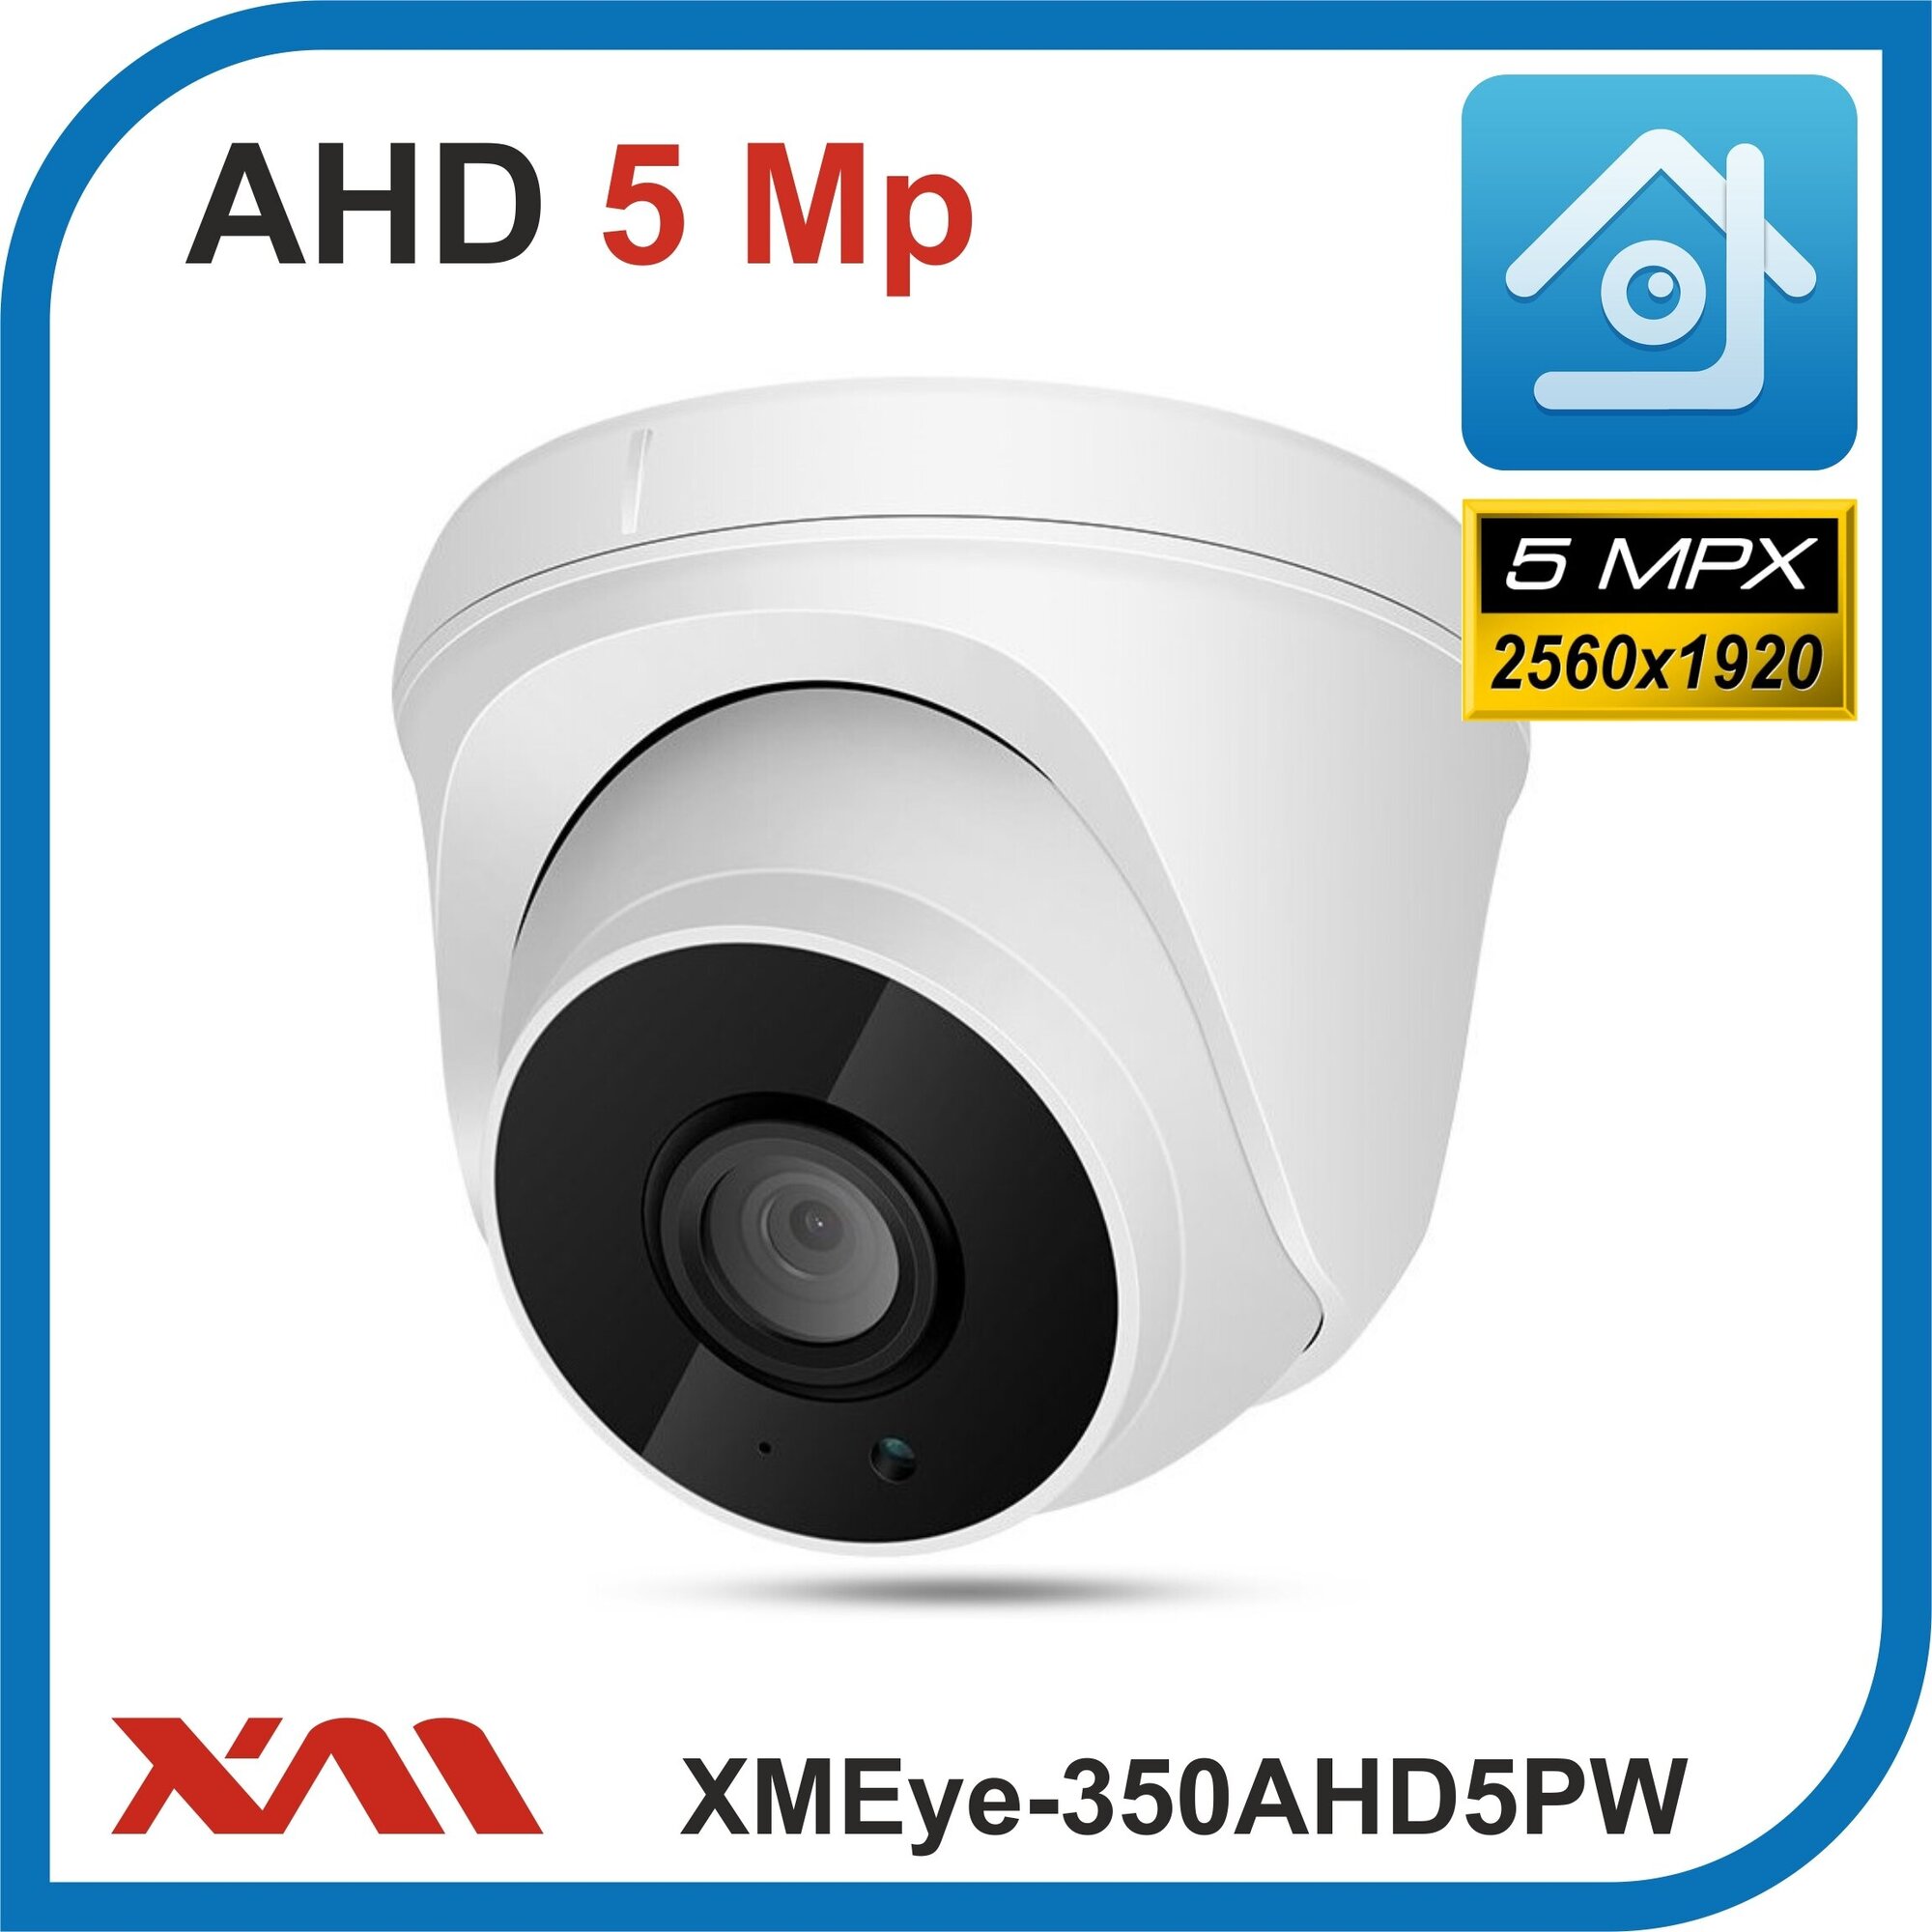 Камера видеонаблюдения купольная мультиформатная 1920P 5Mpx XMEye-350AHD5PW-28 (Пластик/Белая)